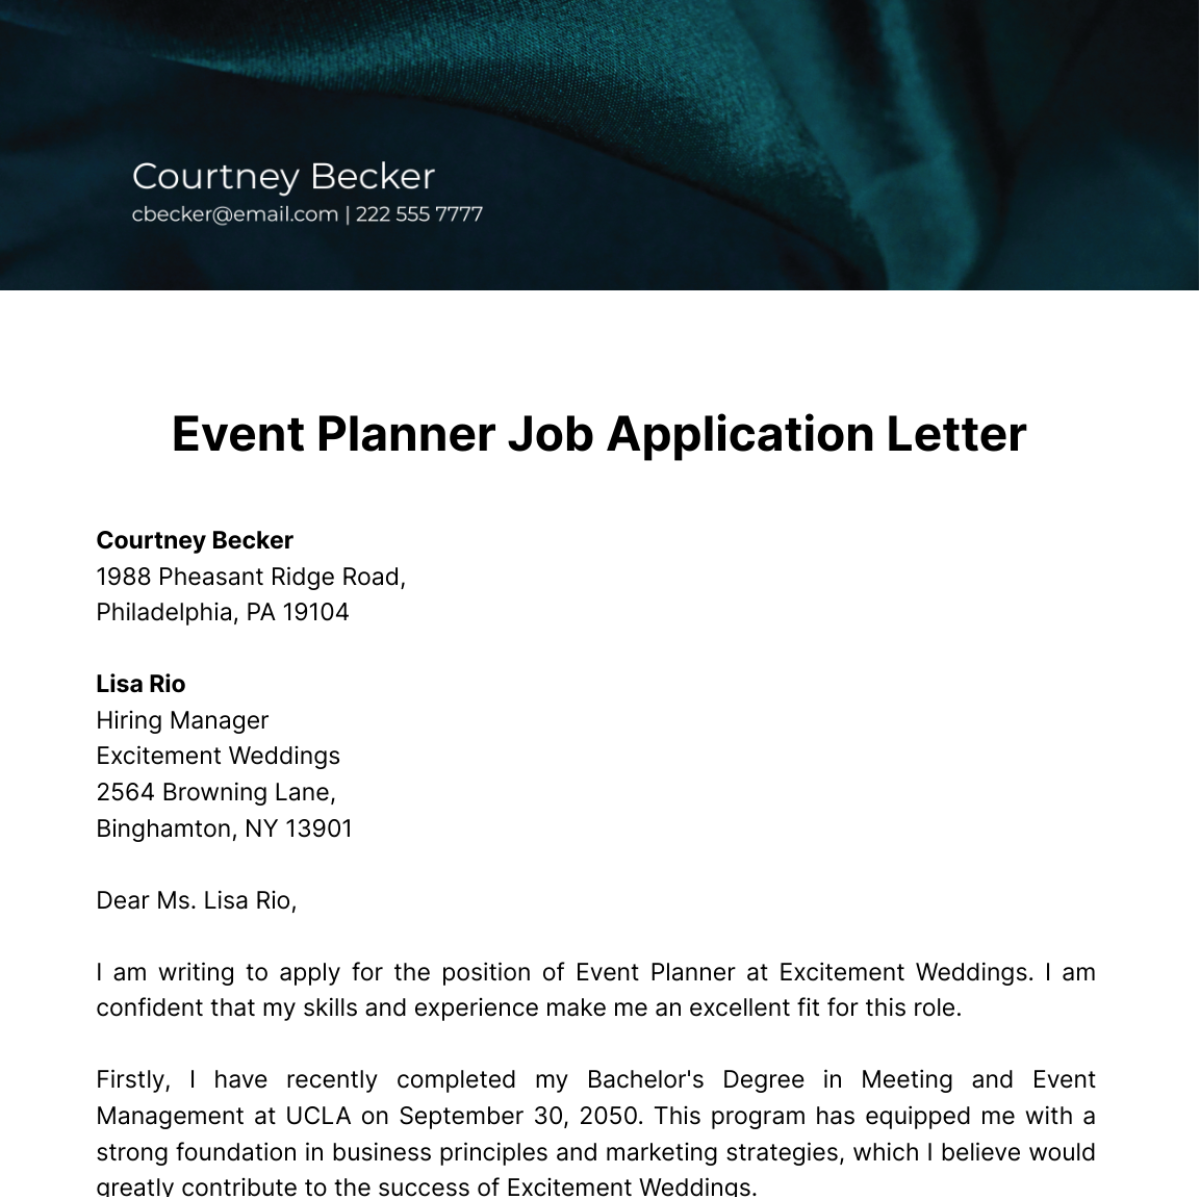 Event Planner Job Application Letter  Template